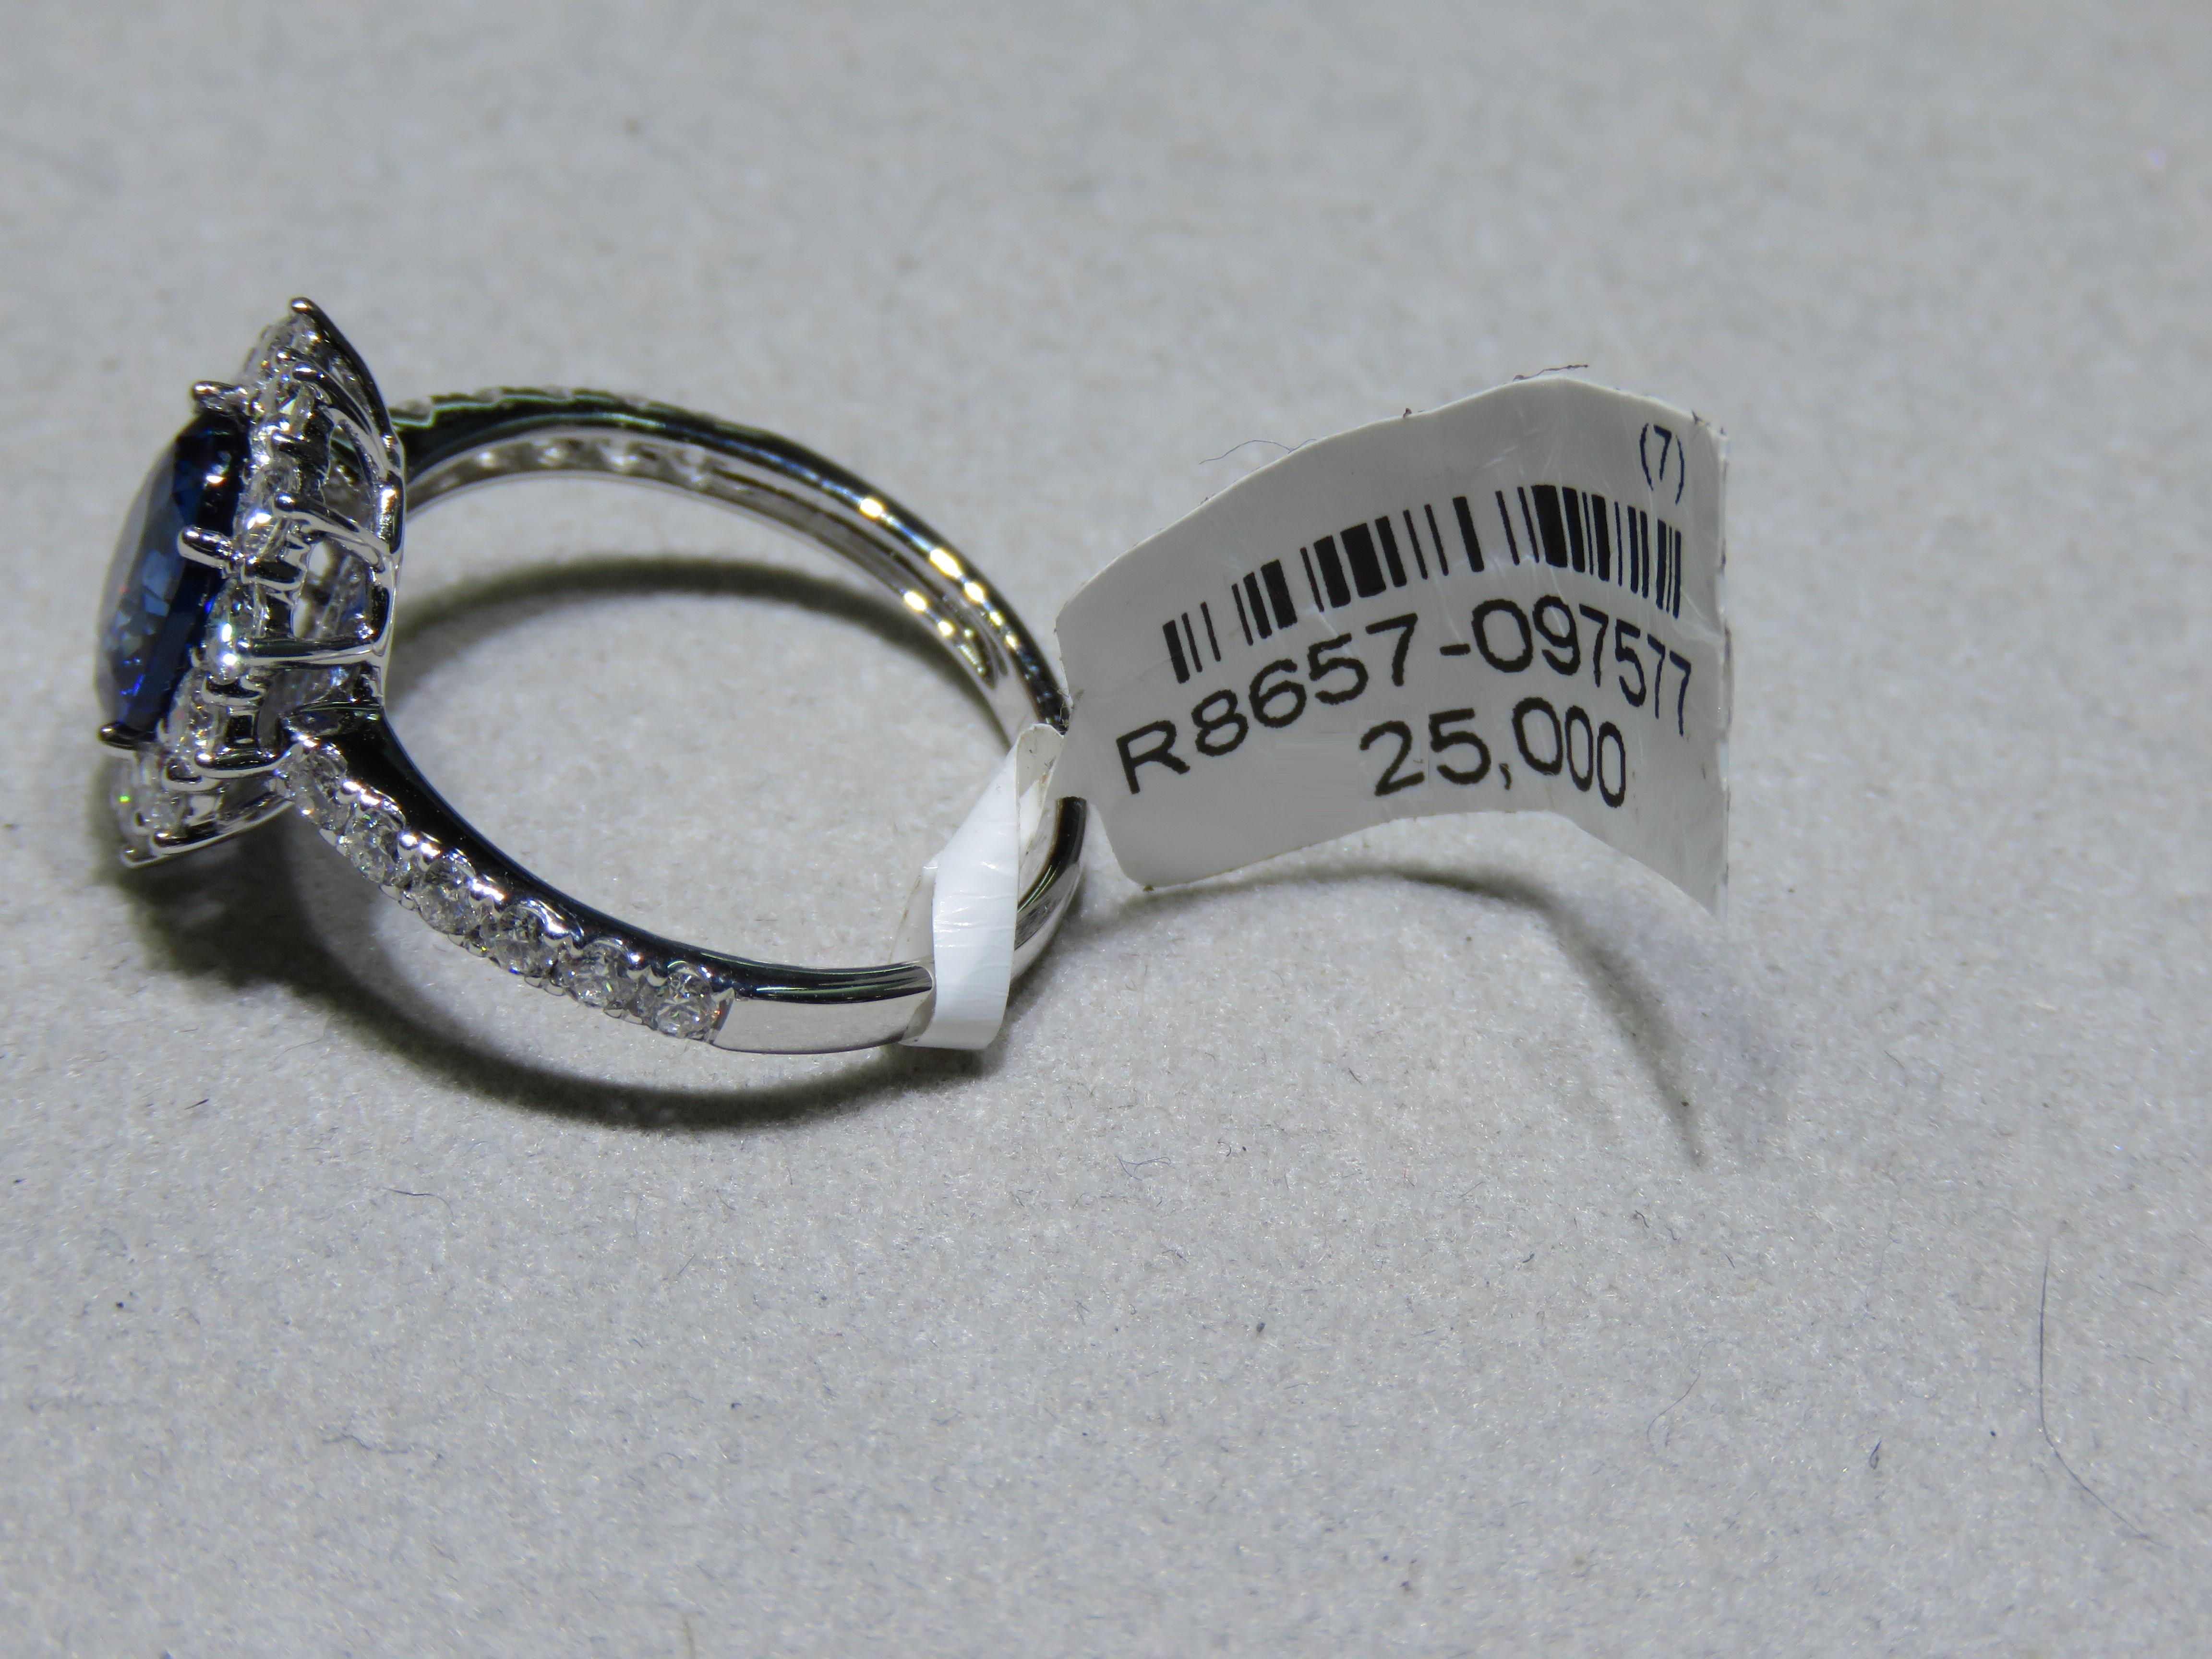 NWT $25, 000 18KT Gold Rare Gorgeous Large Ceylon Blue Sapphire Diamond Ring im Zustand „Neu“ im Angebot in New York, NY